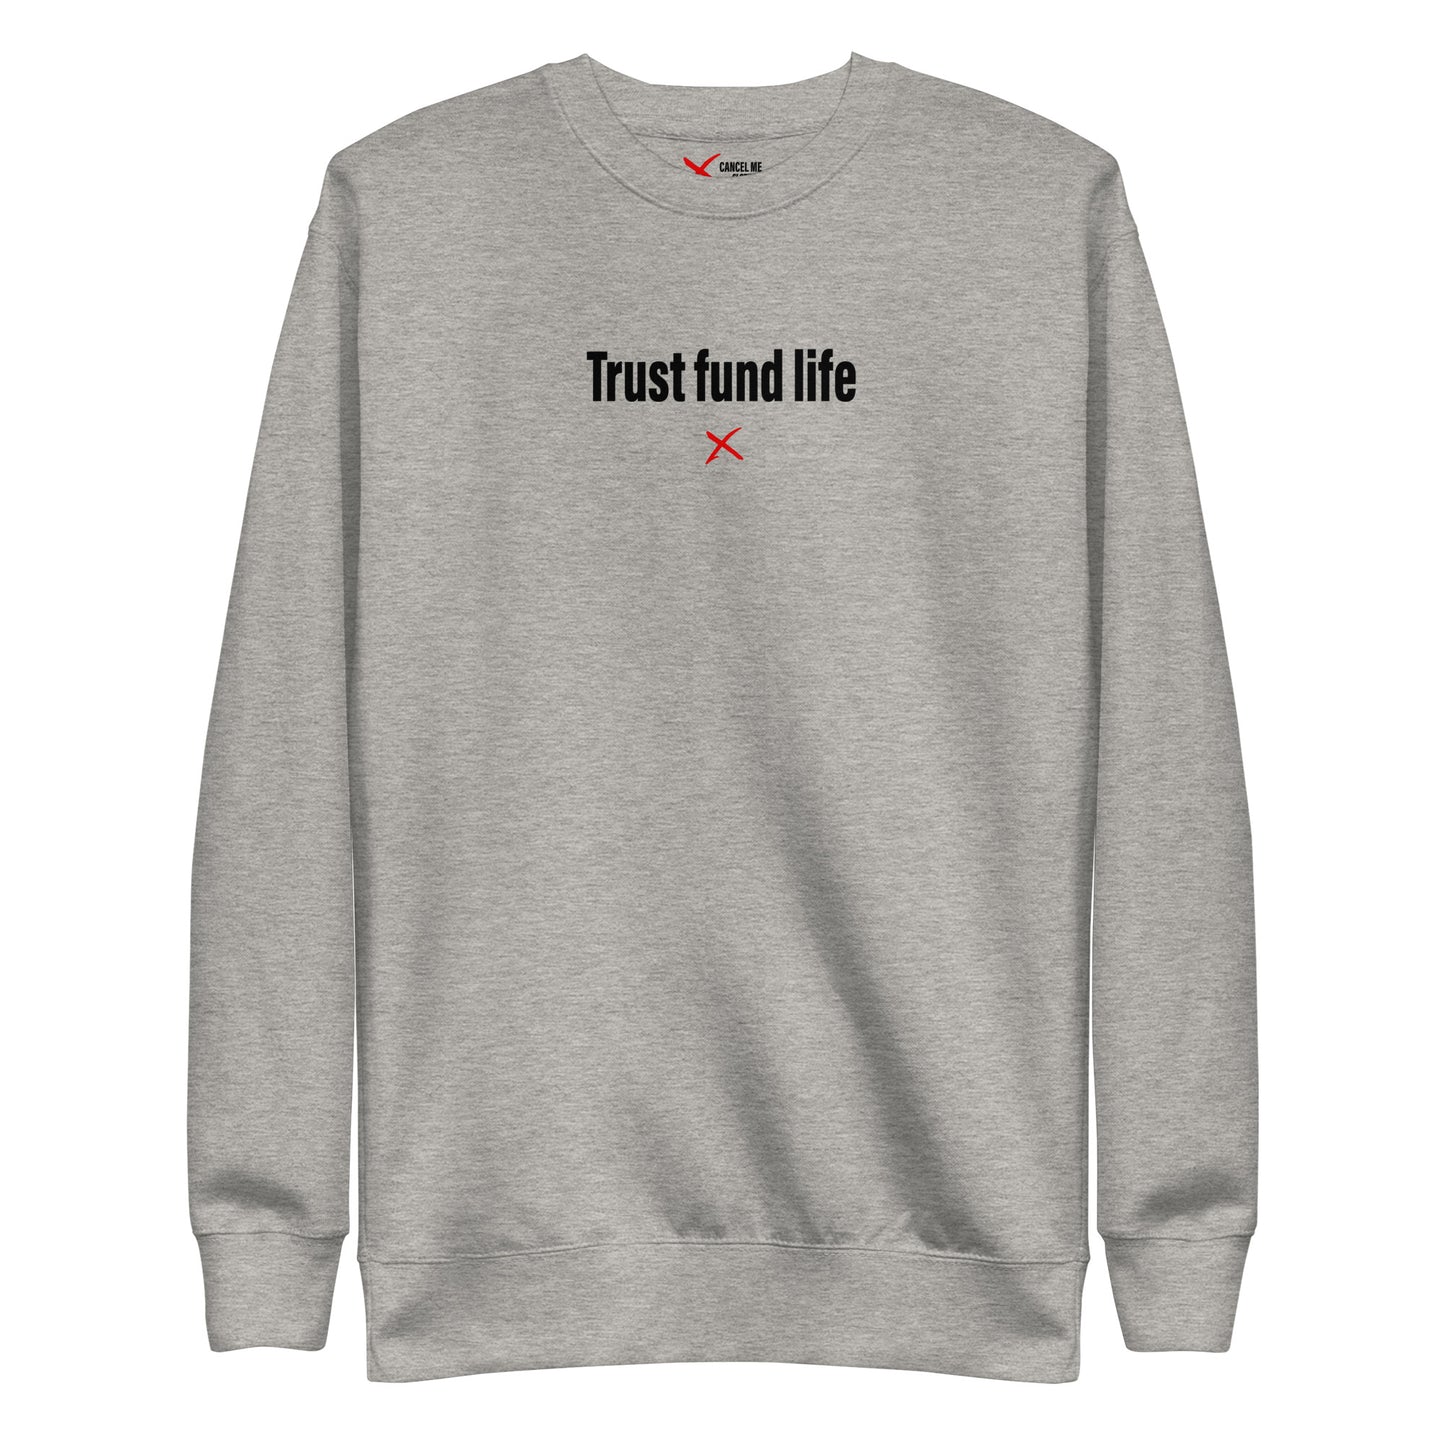 Trust fund life - Sweatshirt